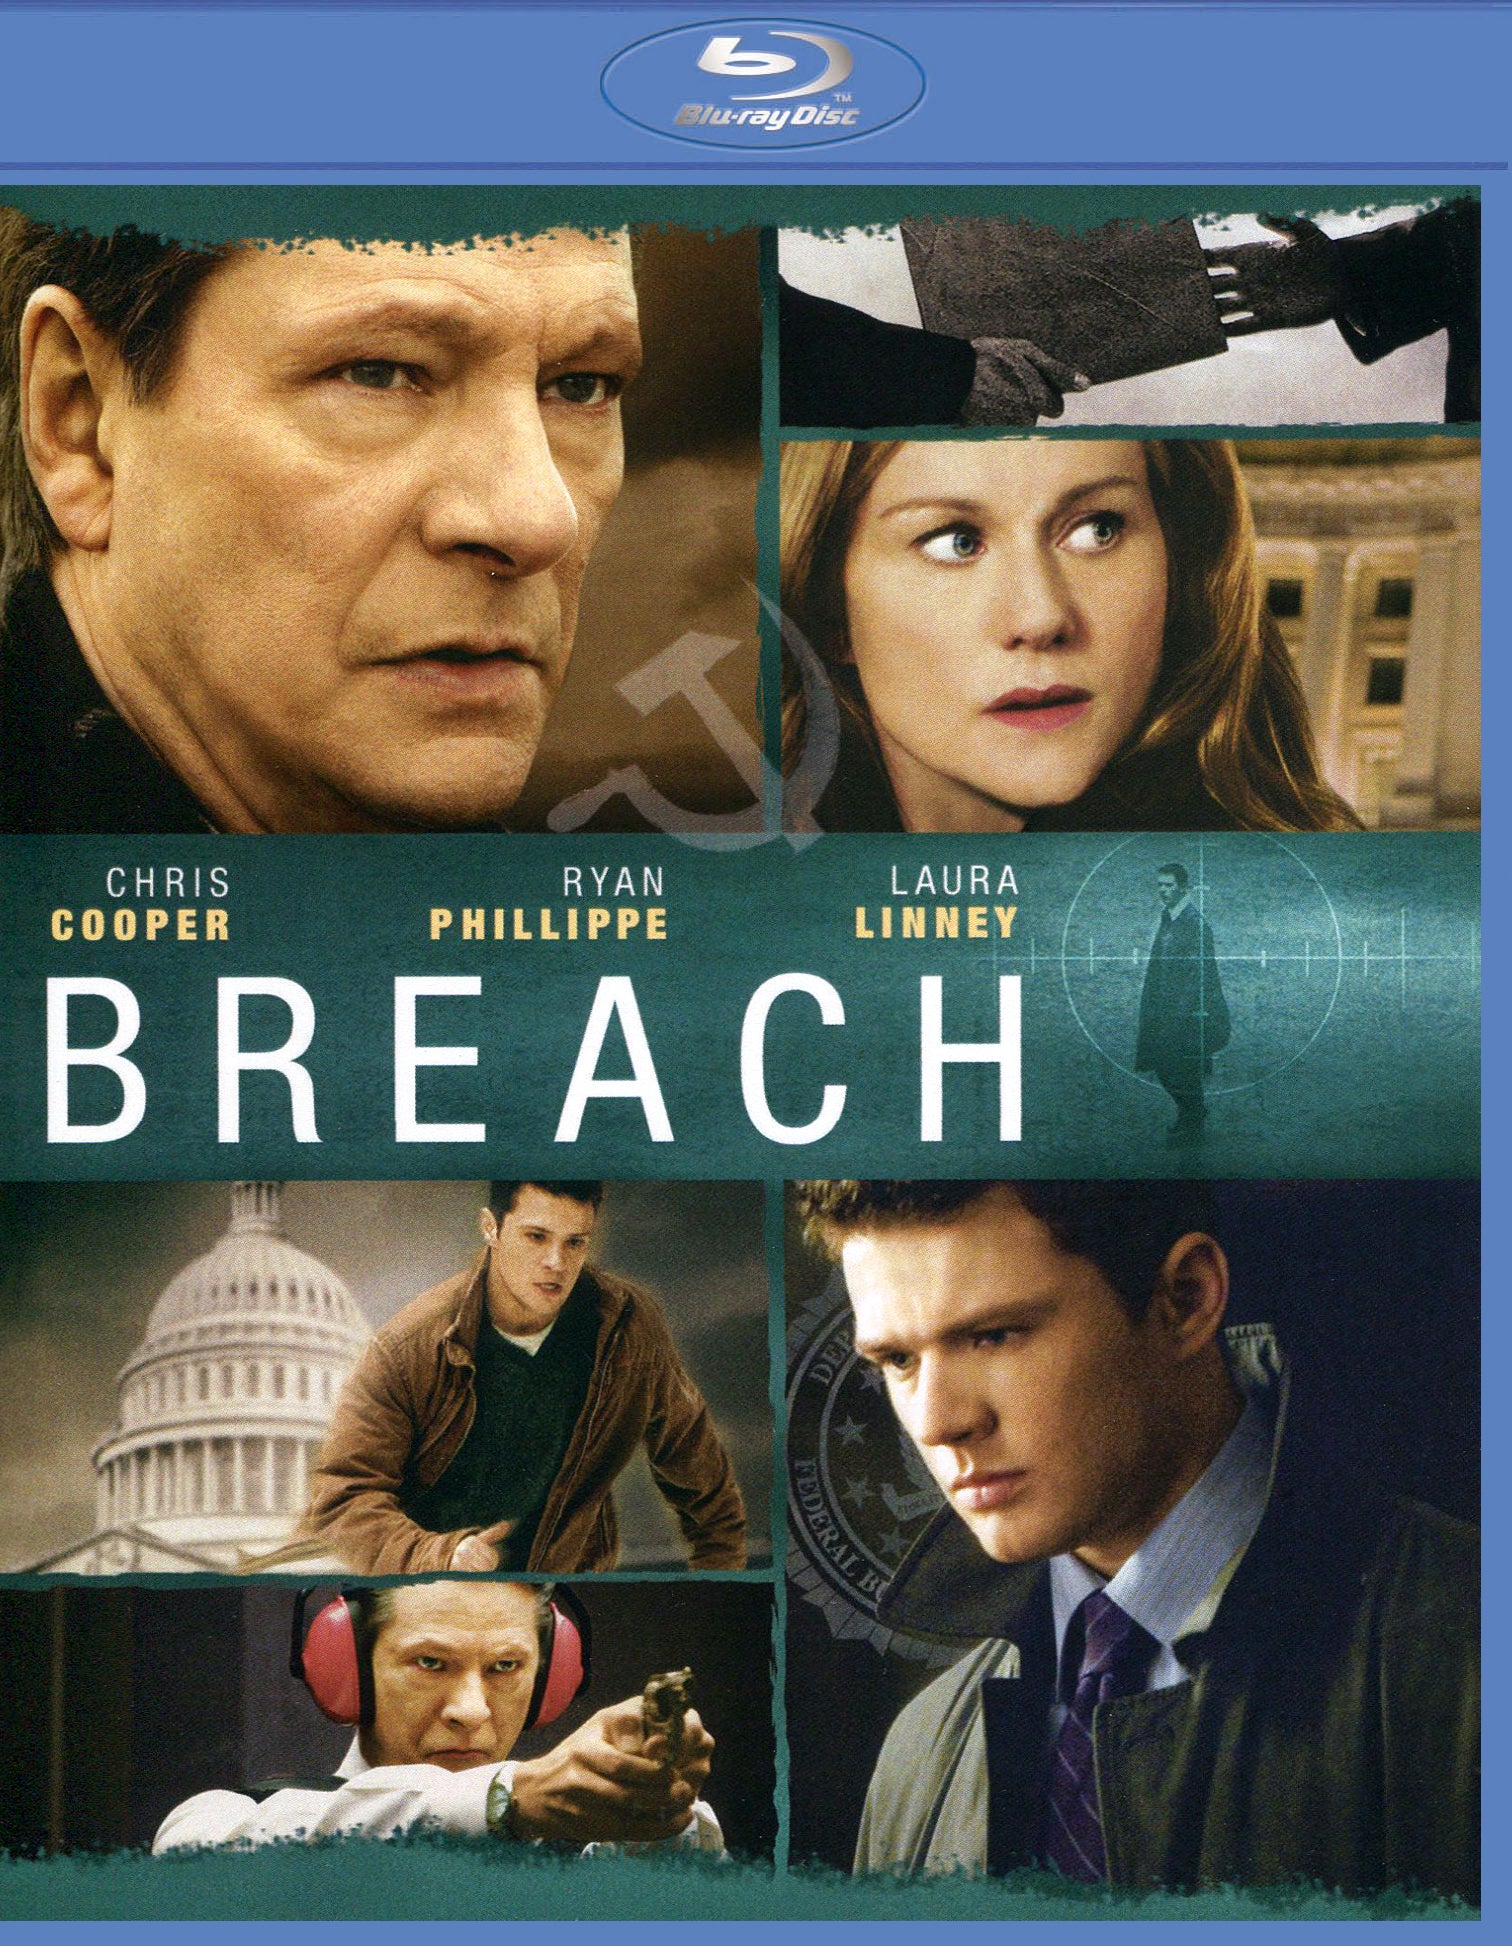 Breach [Blu-ray] cover art